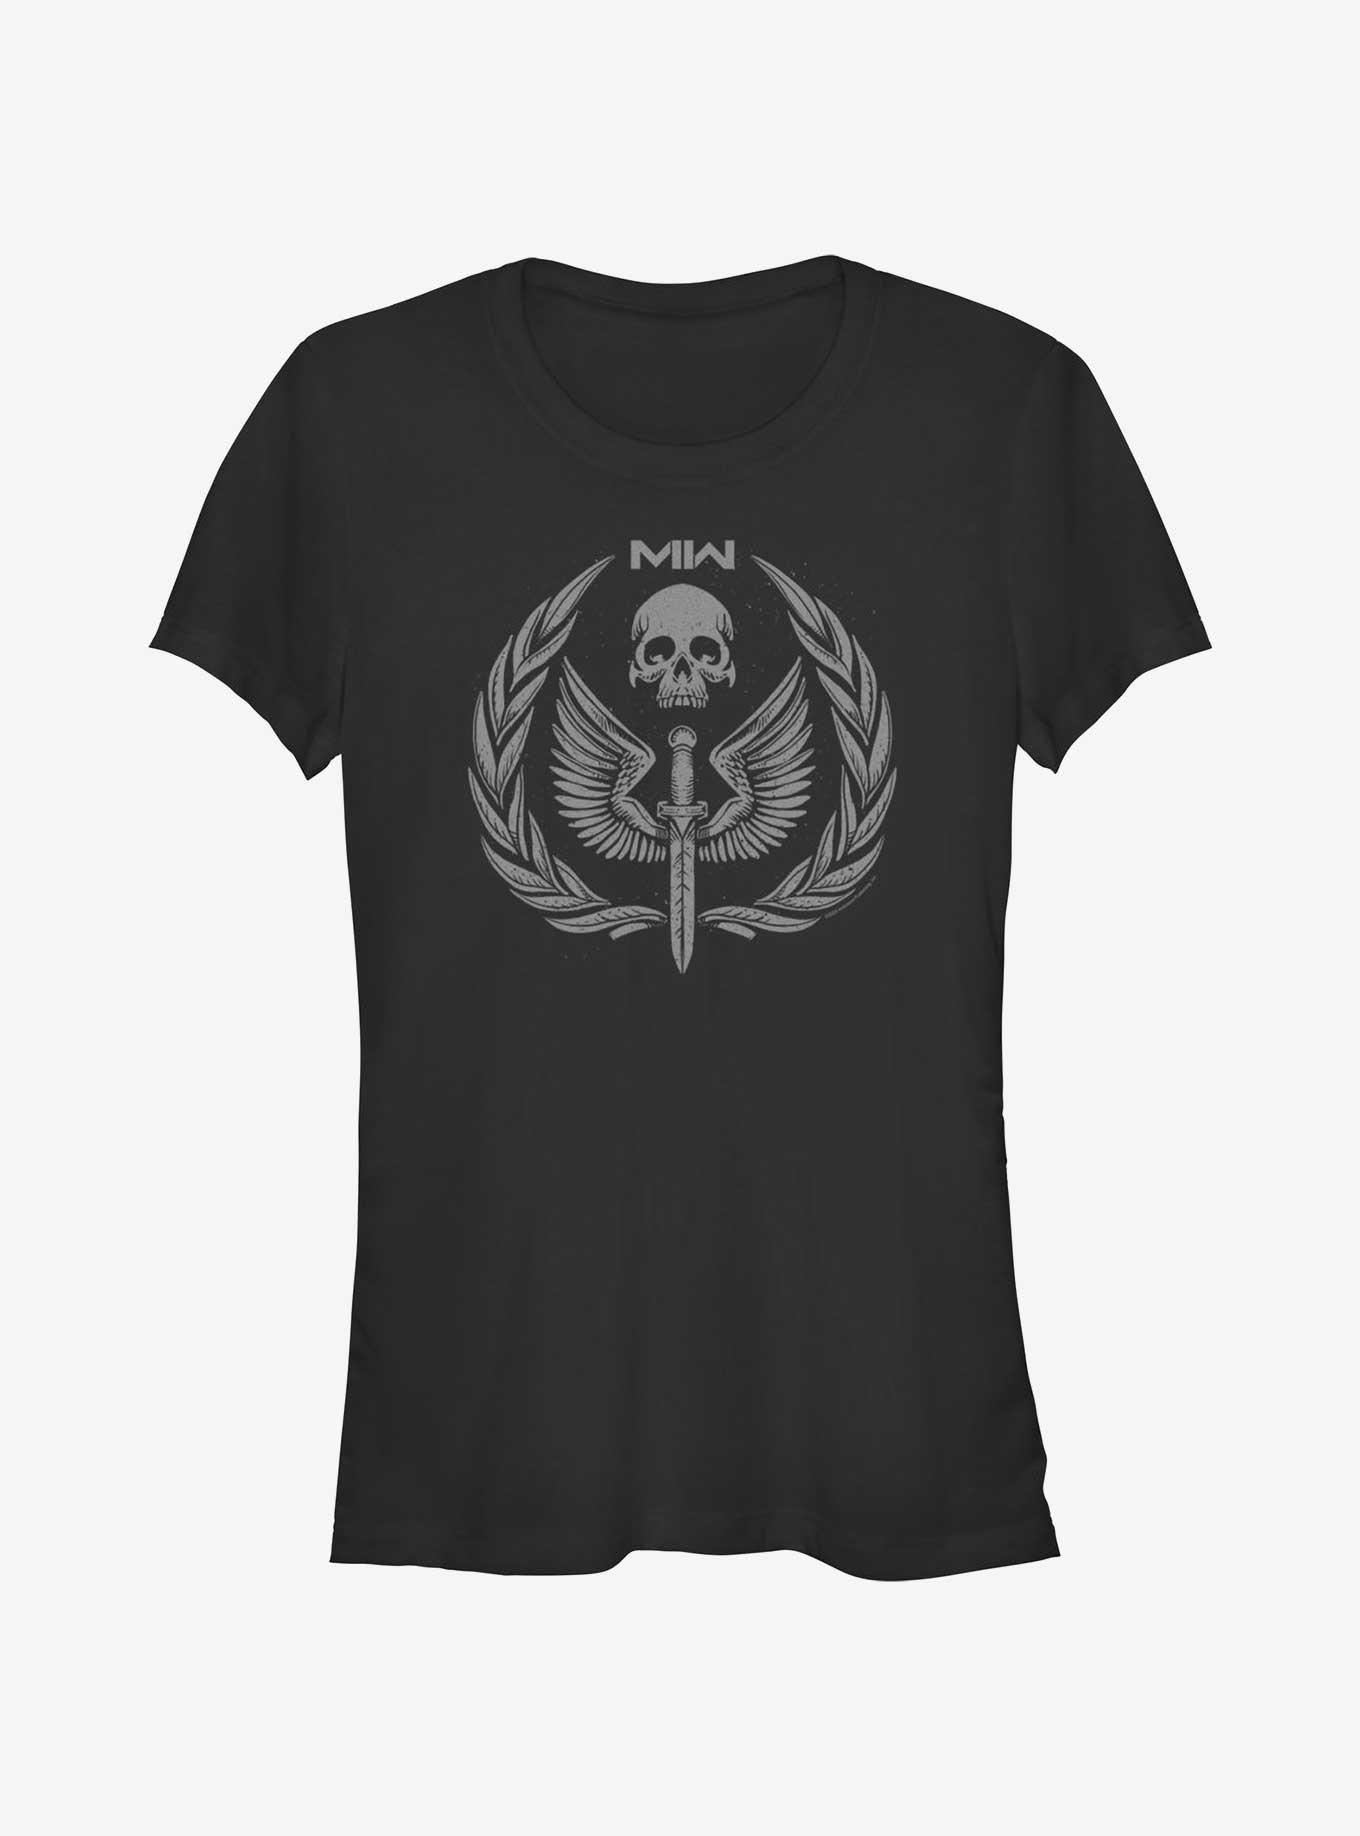 Call of Duty Skull And Dagger Girls T-Shirt